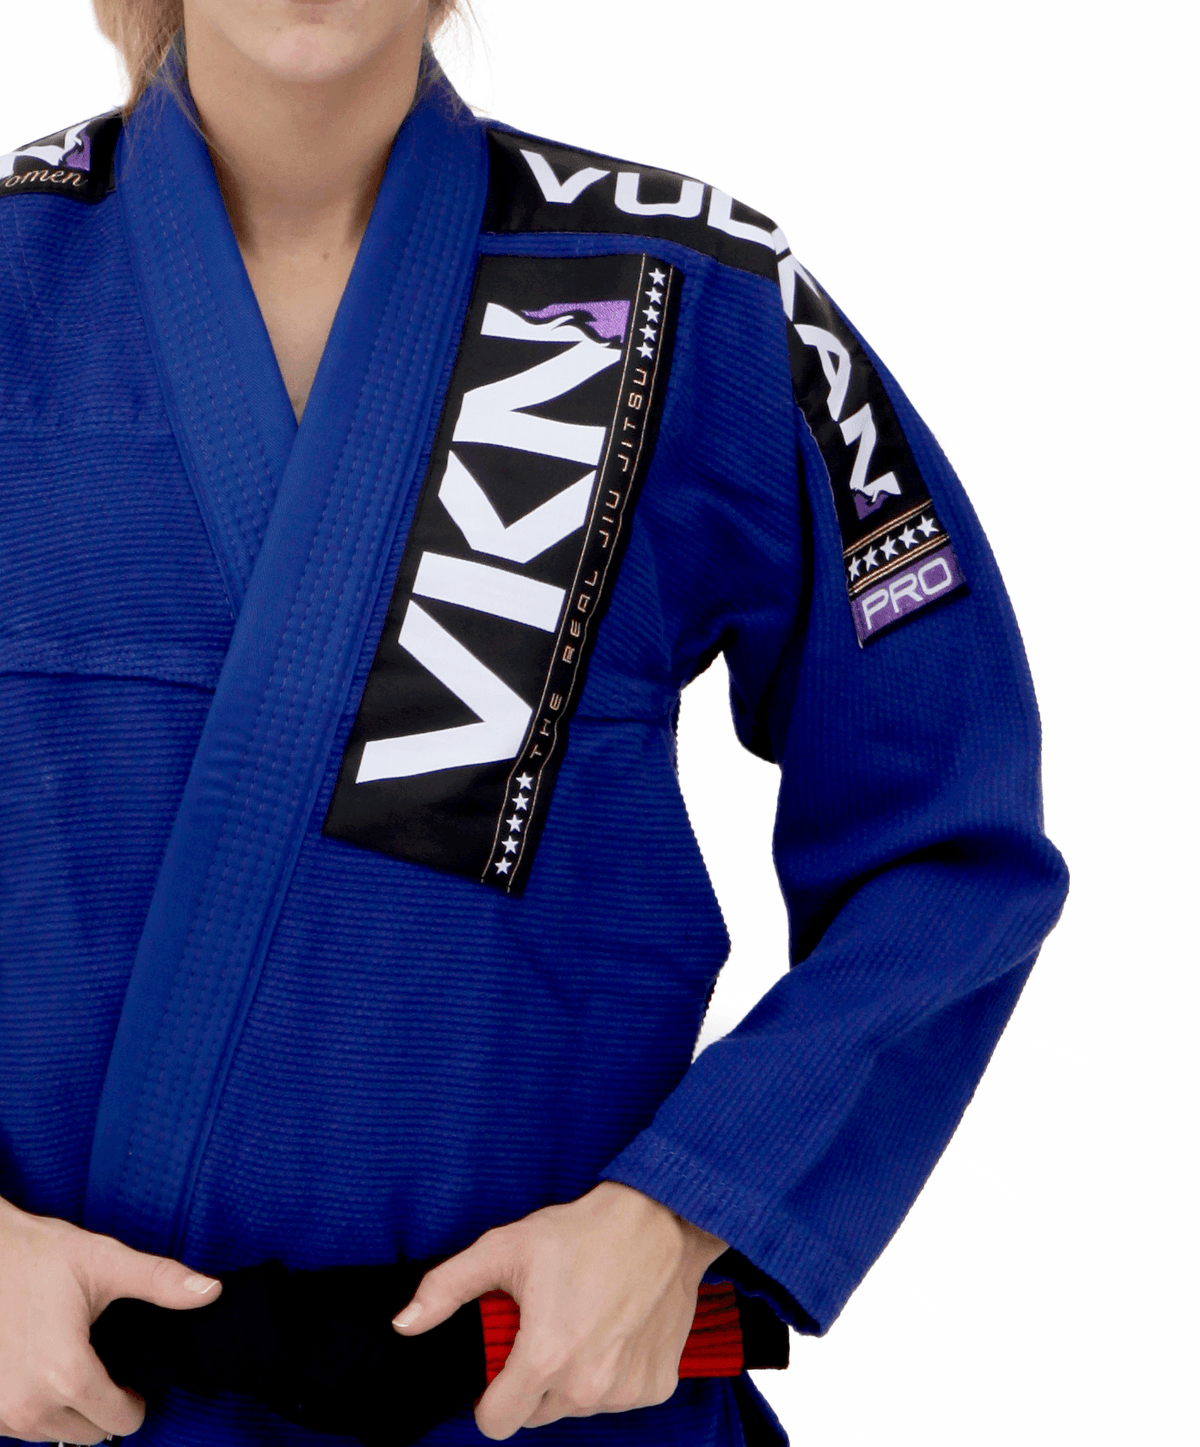 WOMEN&#39;S VKN PRO LIGHT Jiu Jitsu Gi (Blue/Purple)